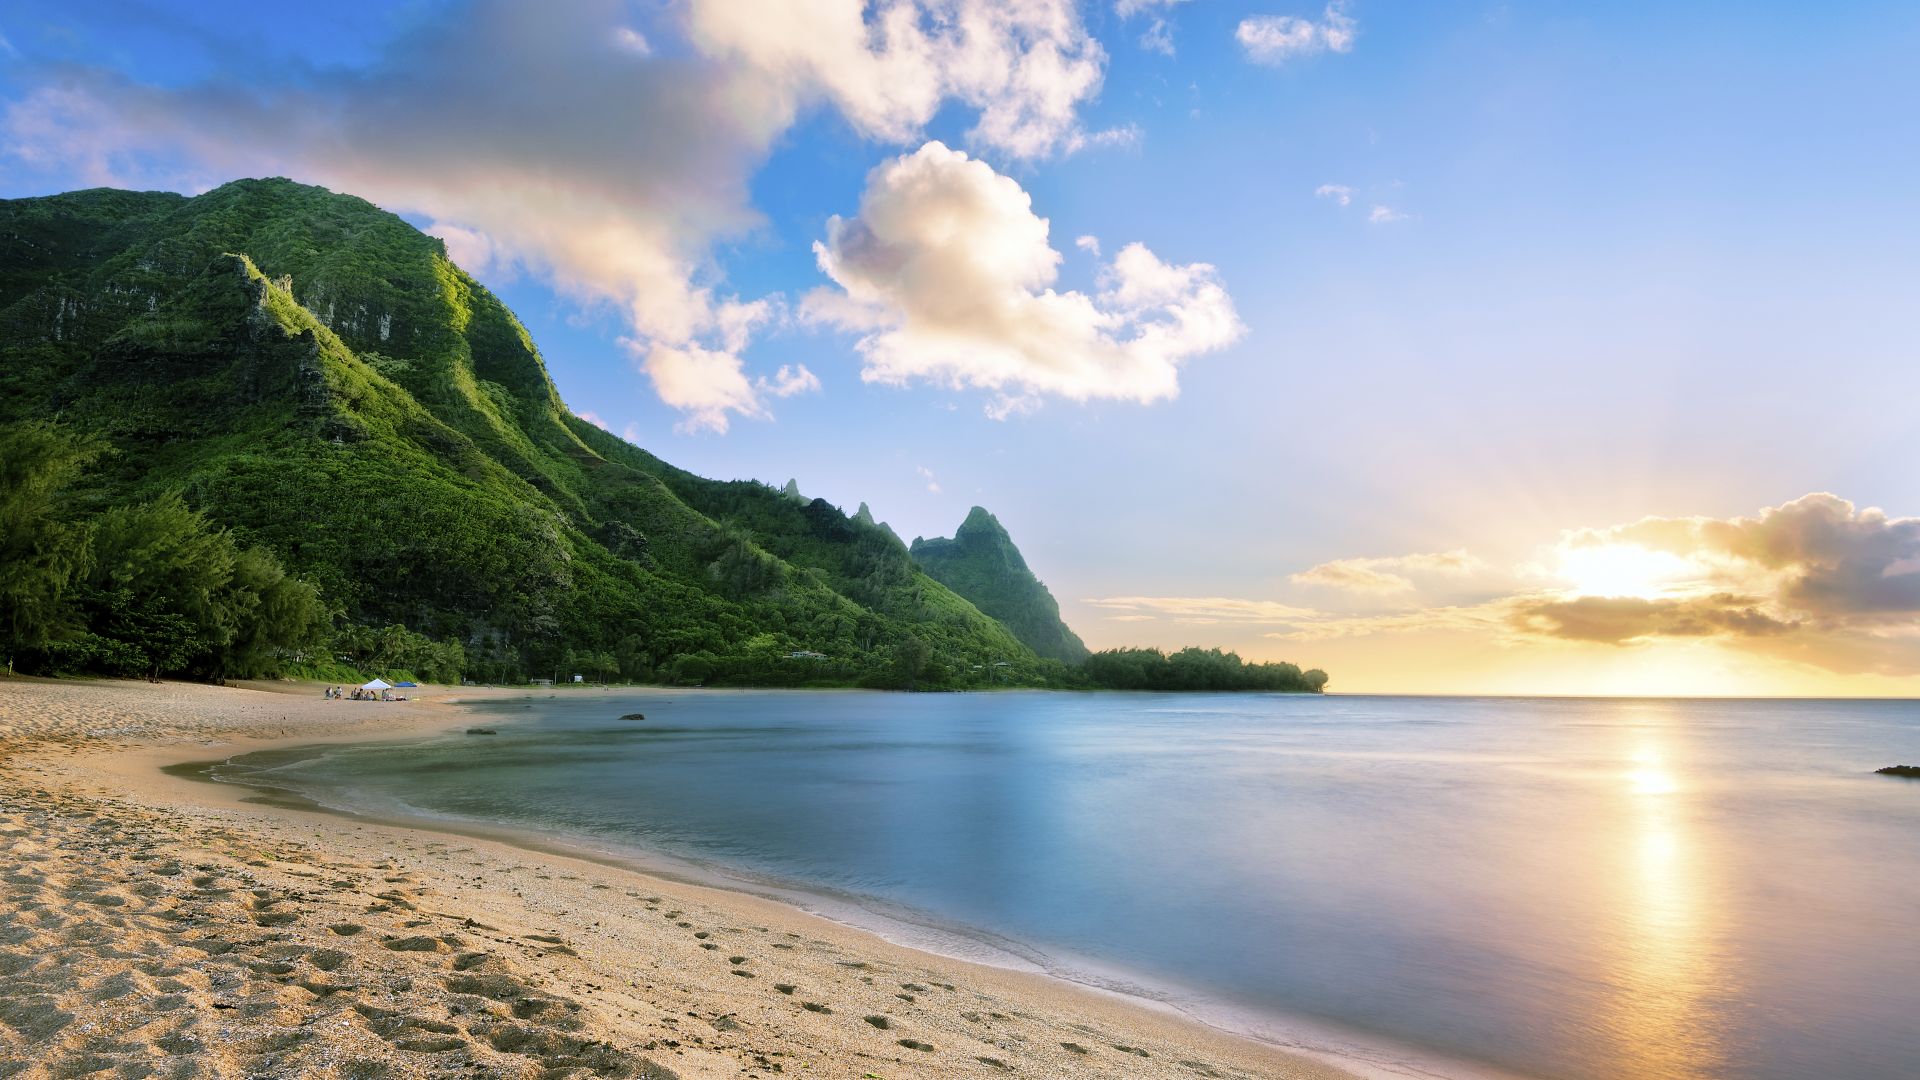 Мауи, пляж, Maui, Hawaii, beach, ocean, coast, mountain, sky, 5k (horizontal)